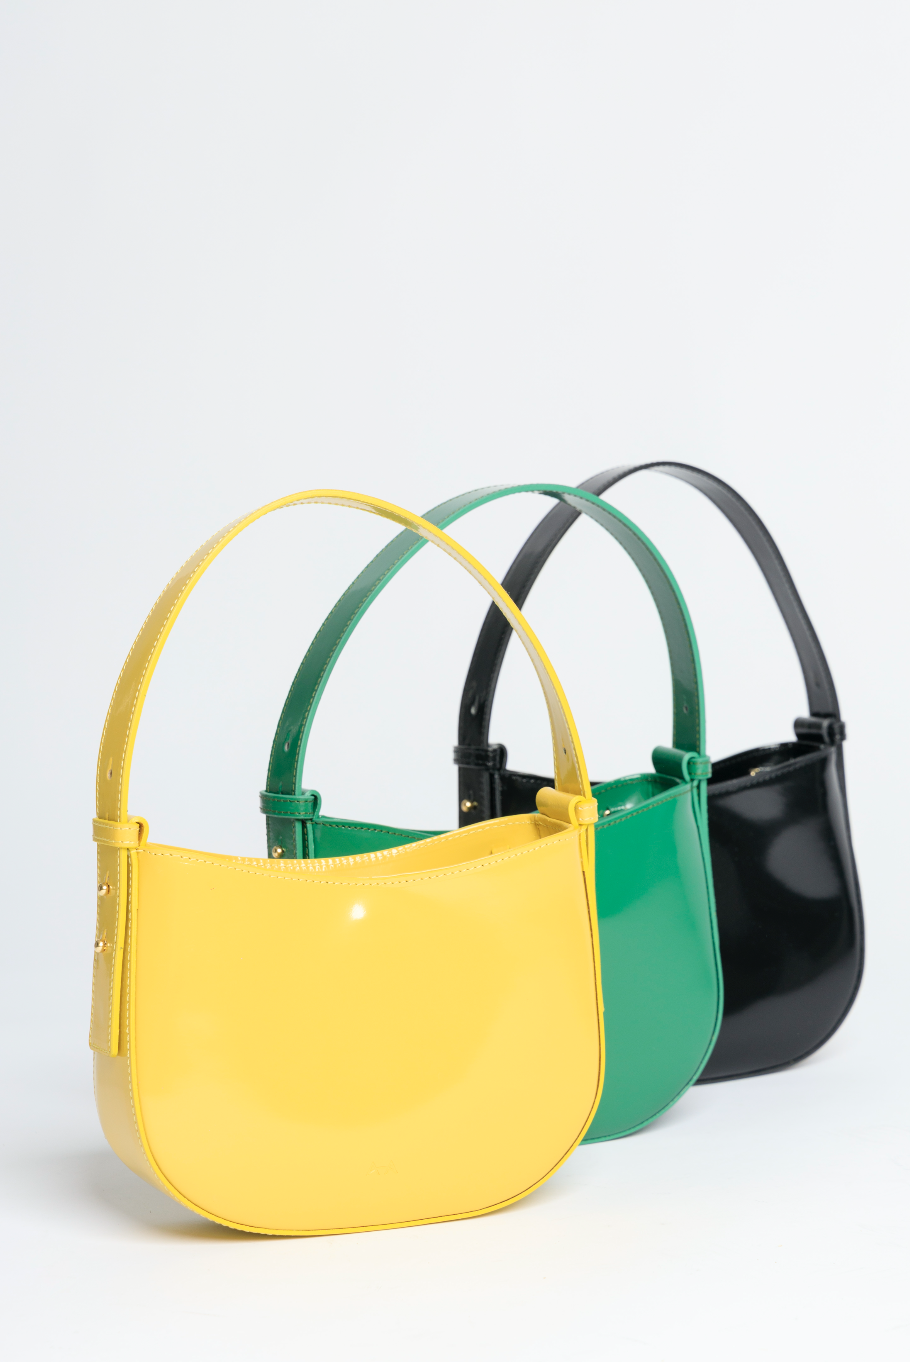 Mio Yellow Semi Patent Leather Shoulder Bag CL10678 GIALLO - 12